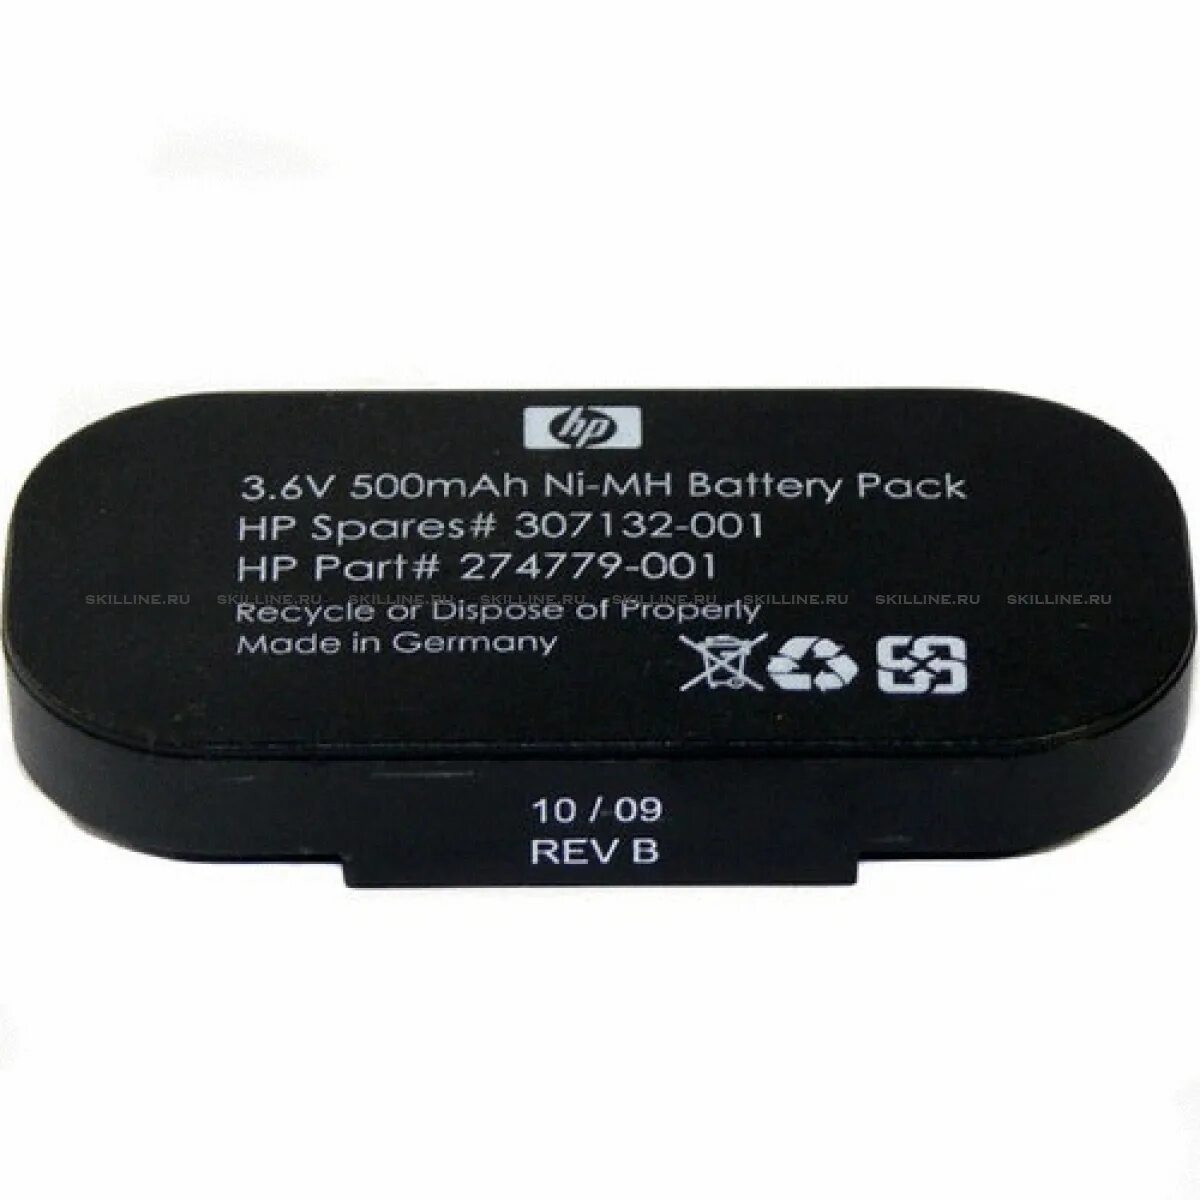 DL 380 6v аккумулятор. Battery Pack оригинал.